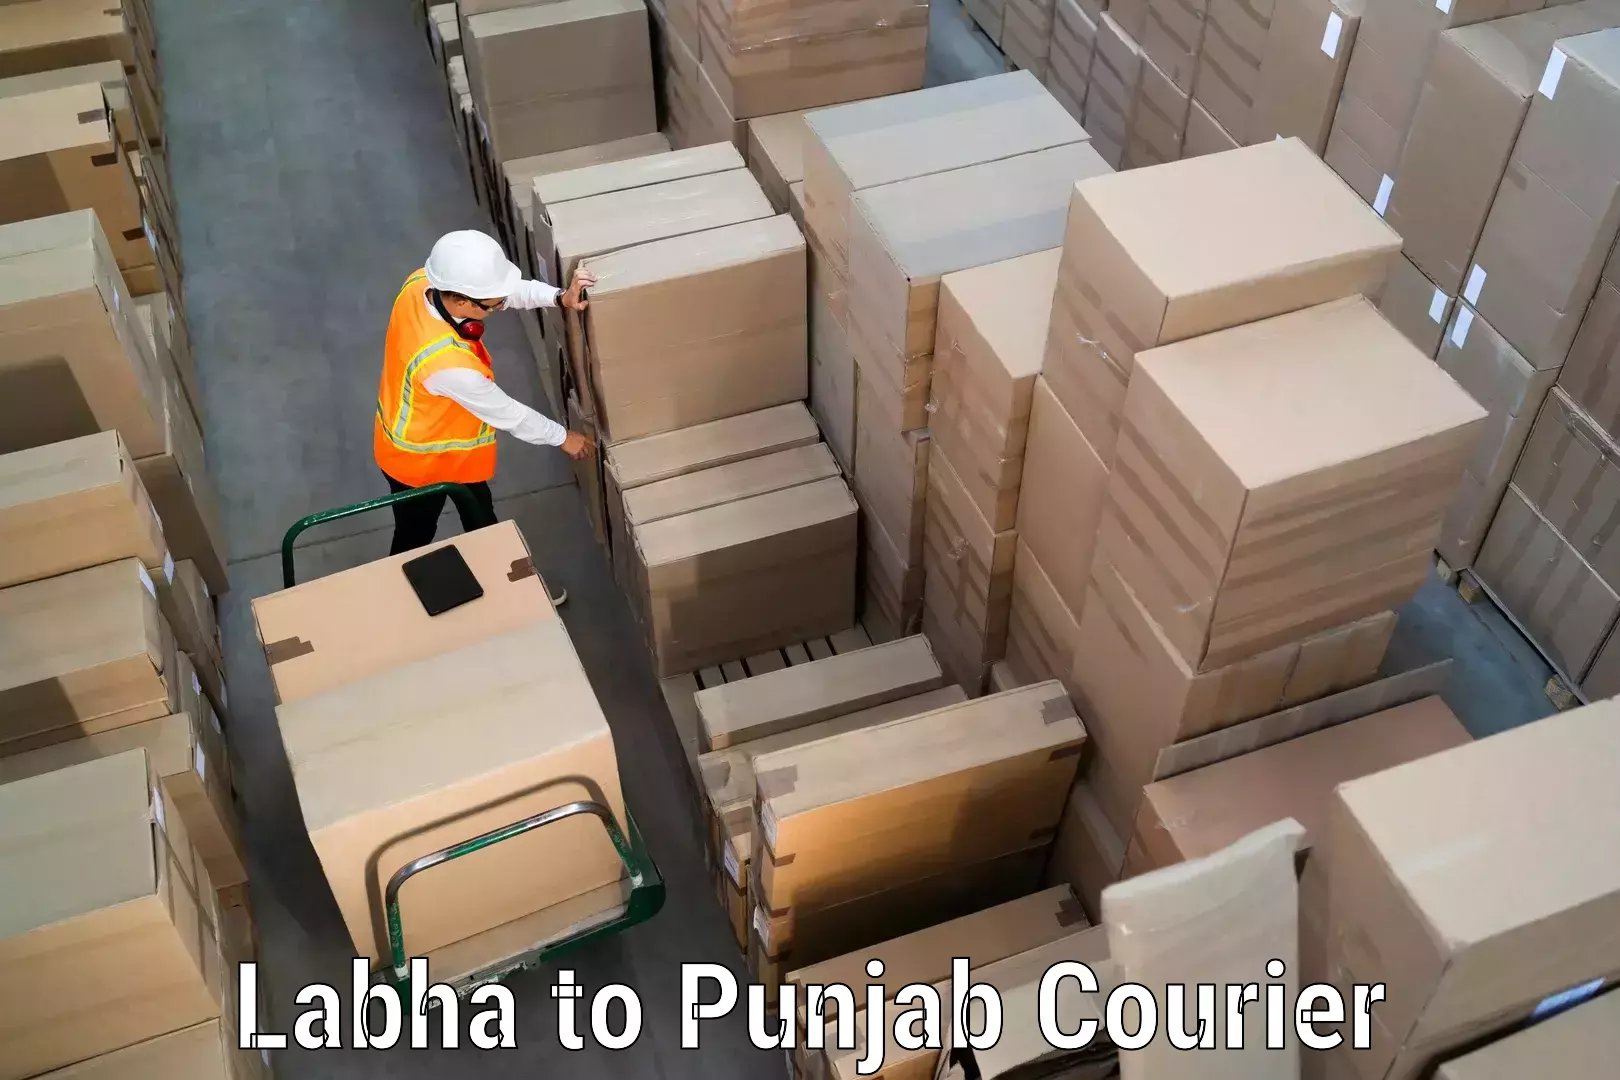 Urgent courier needs Labha to Punjab